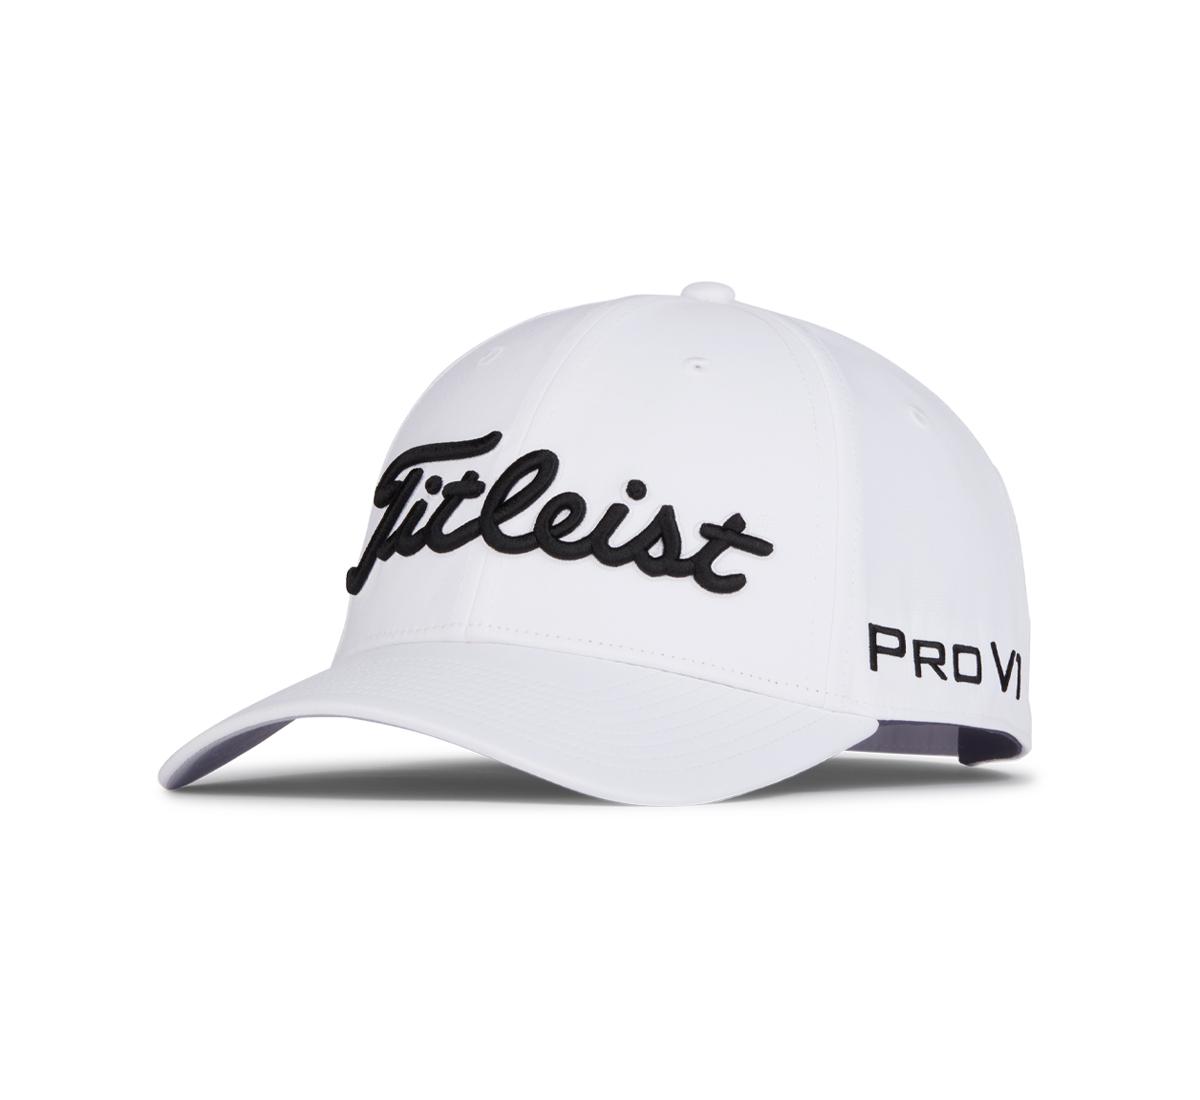 Titleist Golf Tour Performance Hat